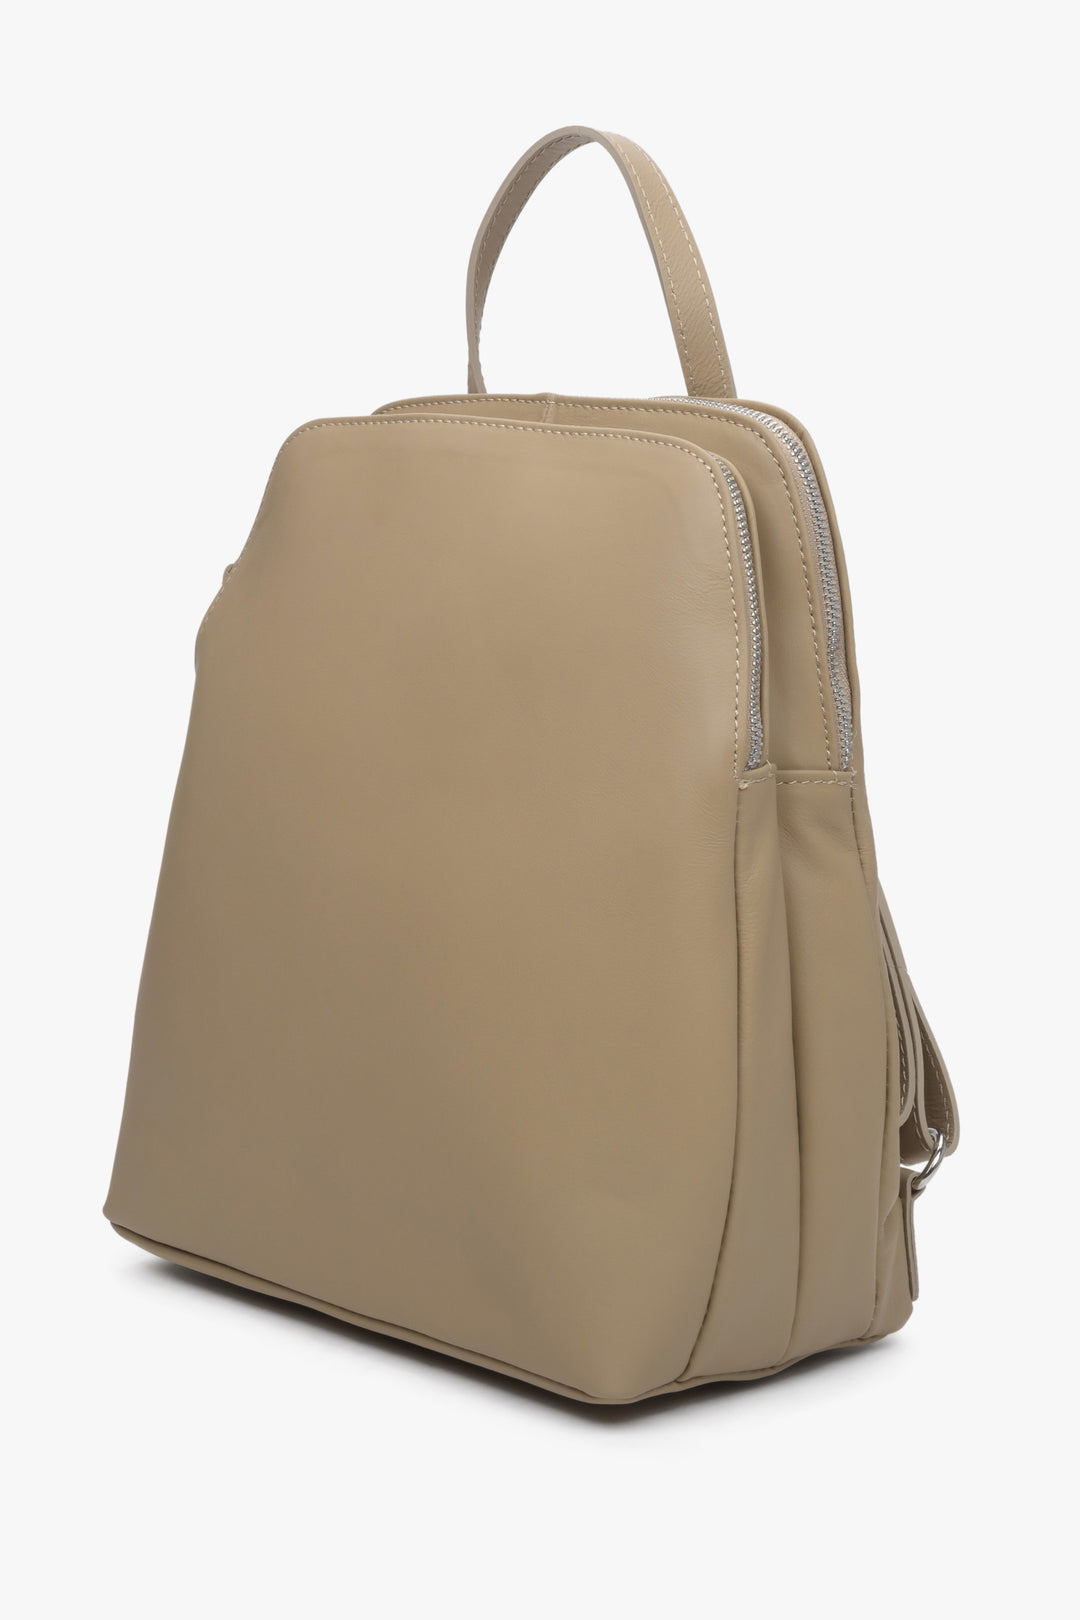 Women's beige leather backpack by Estro.